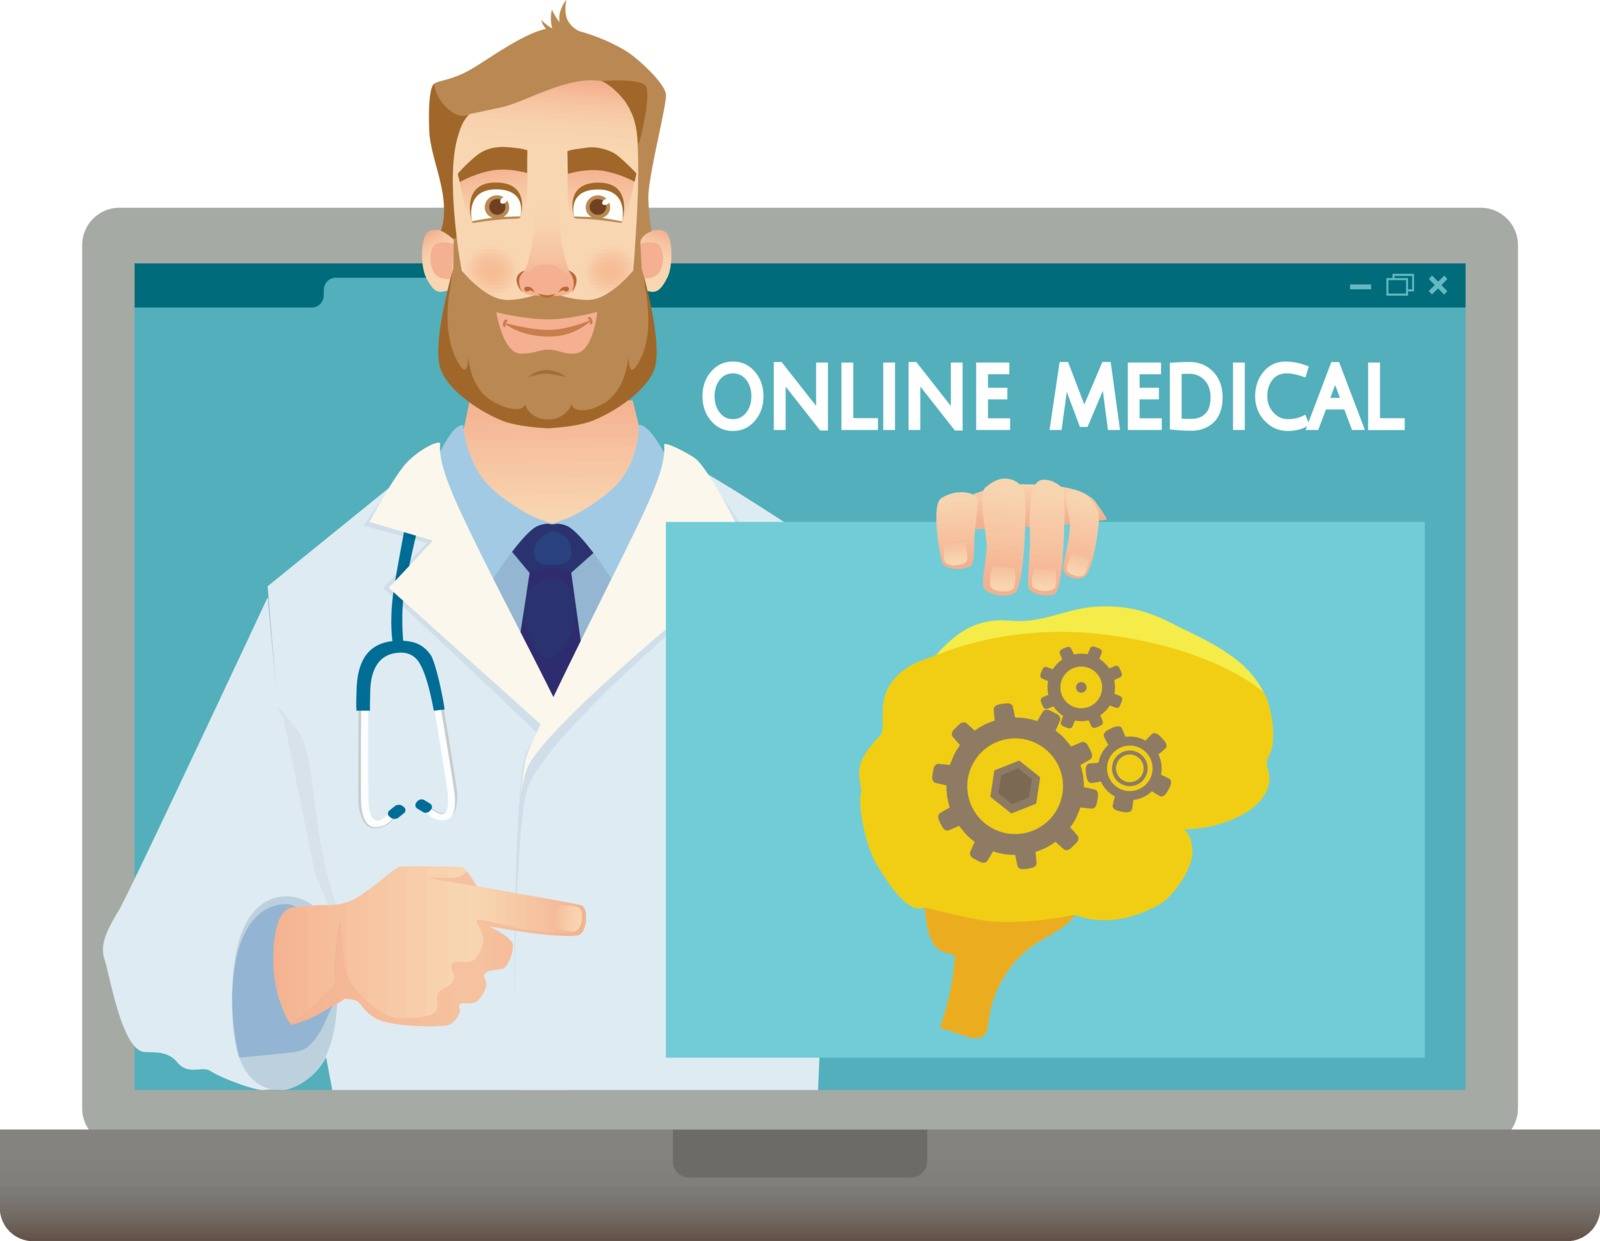 Online medicine concept by Visual-Content